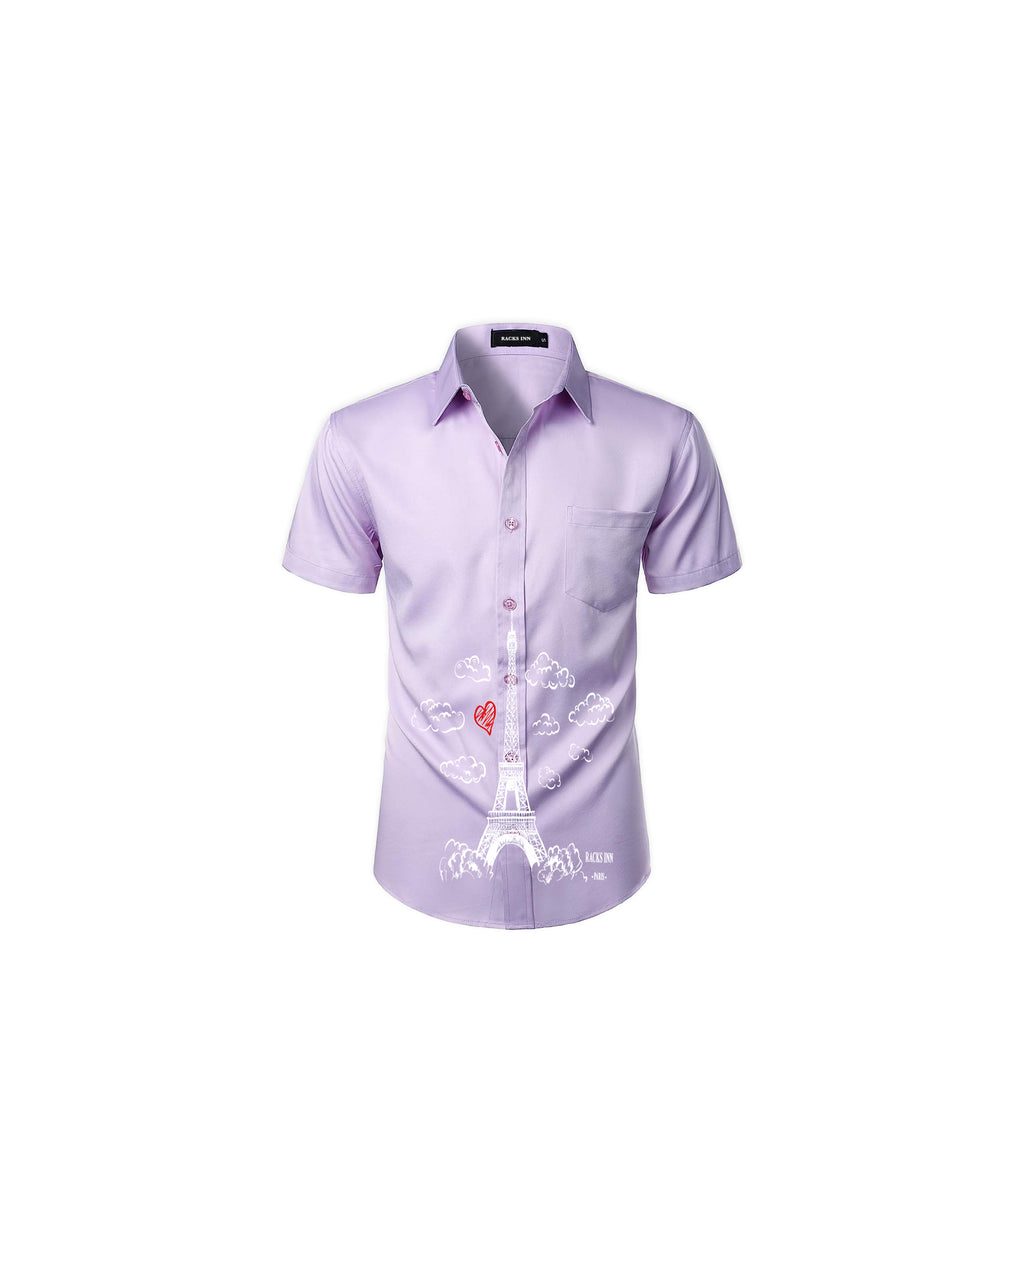 Racks Tower Casual Shirt - Lavender